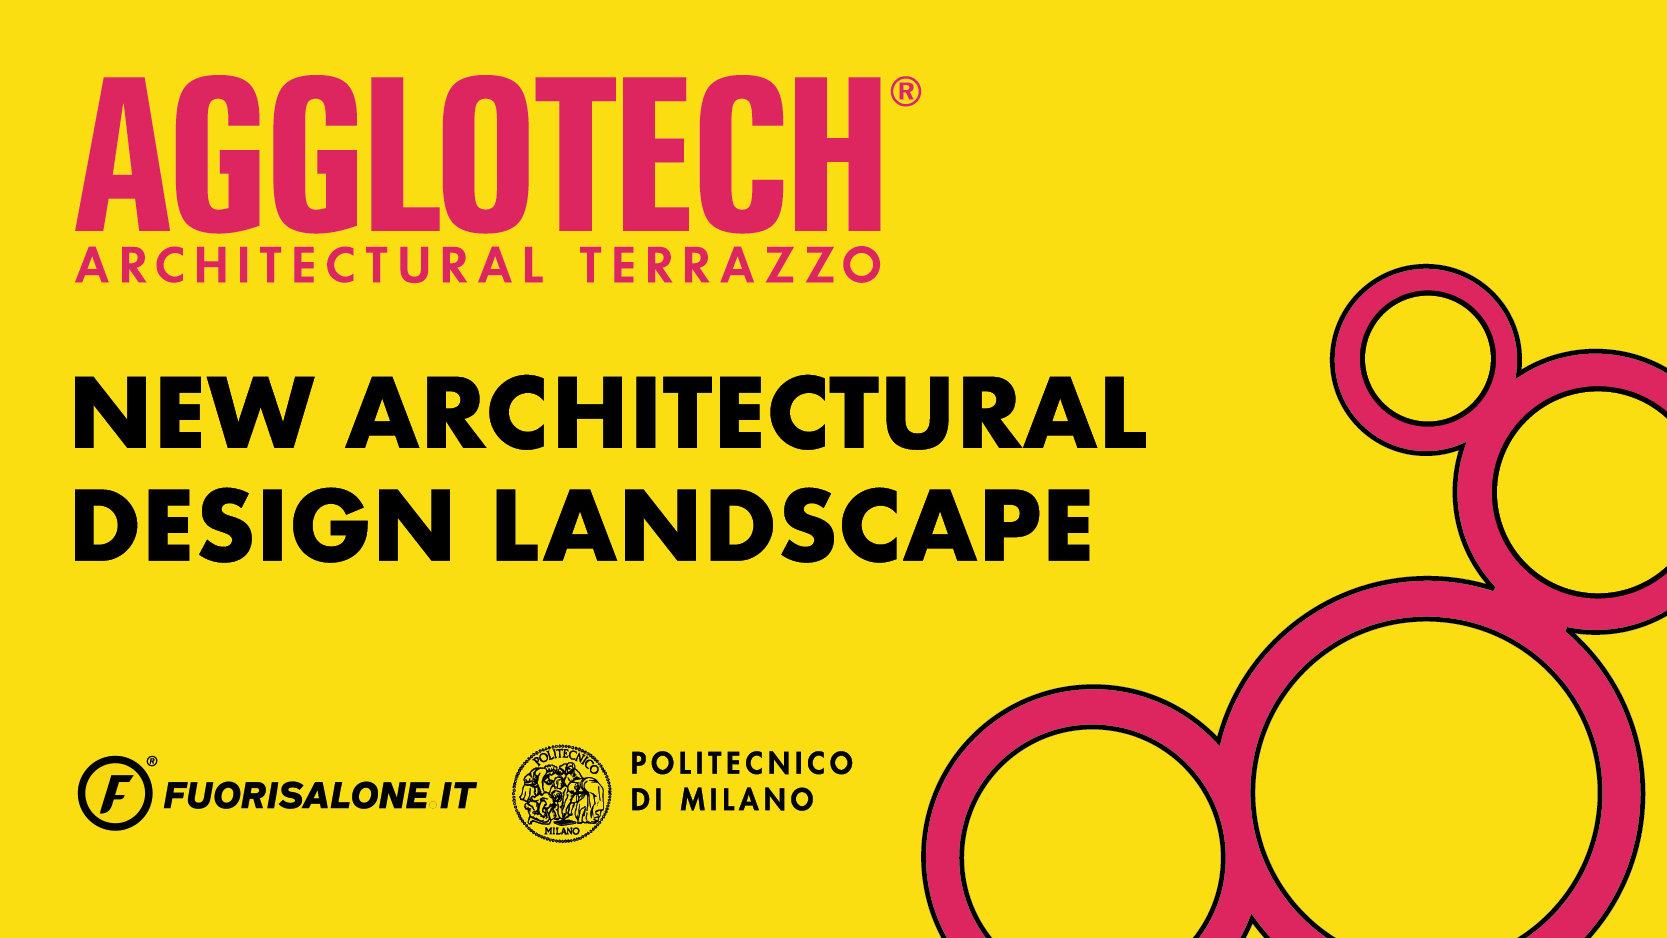 Agglotech for New Architectural Design Landscape